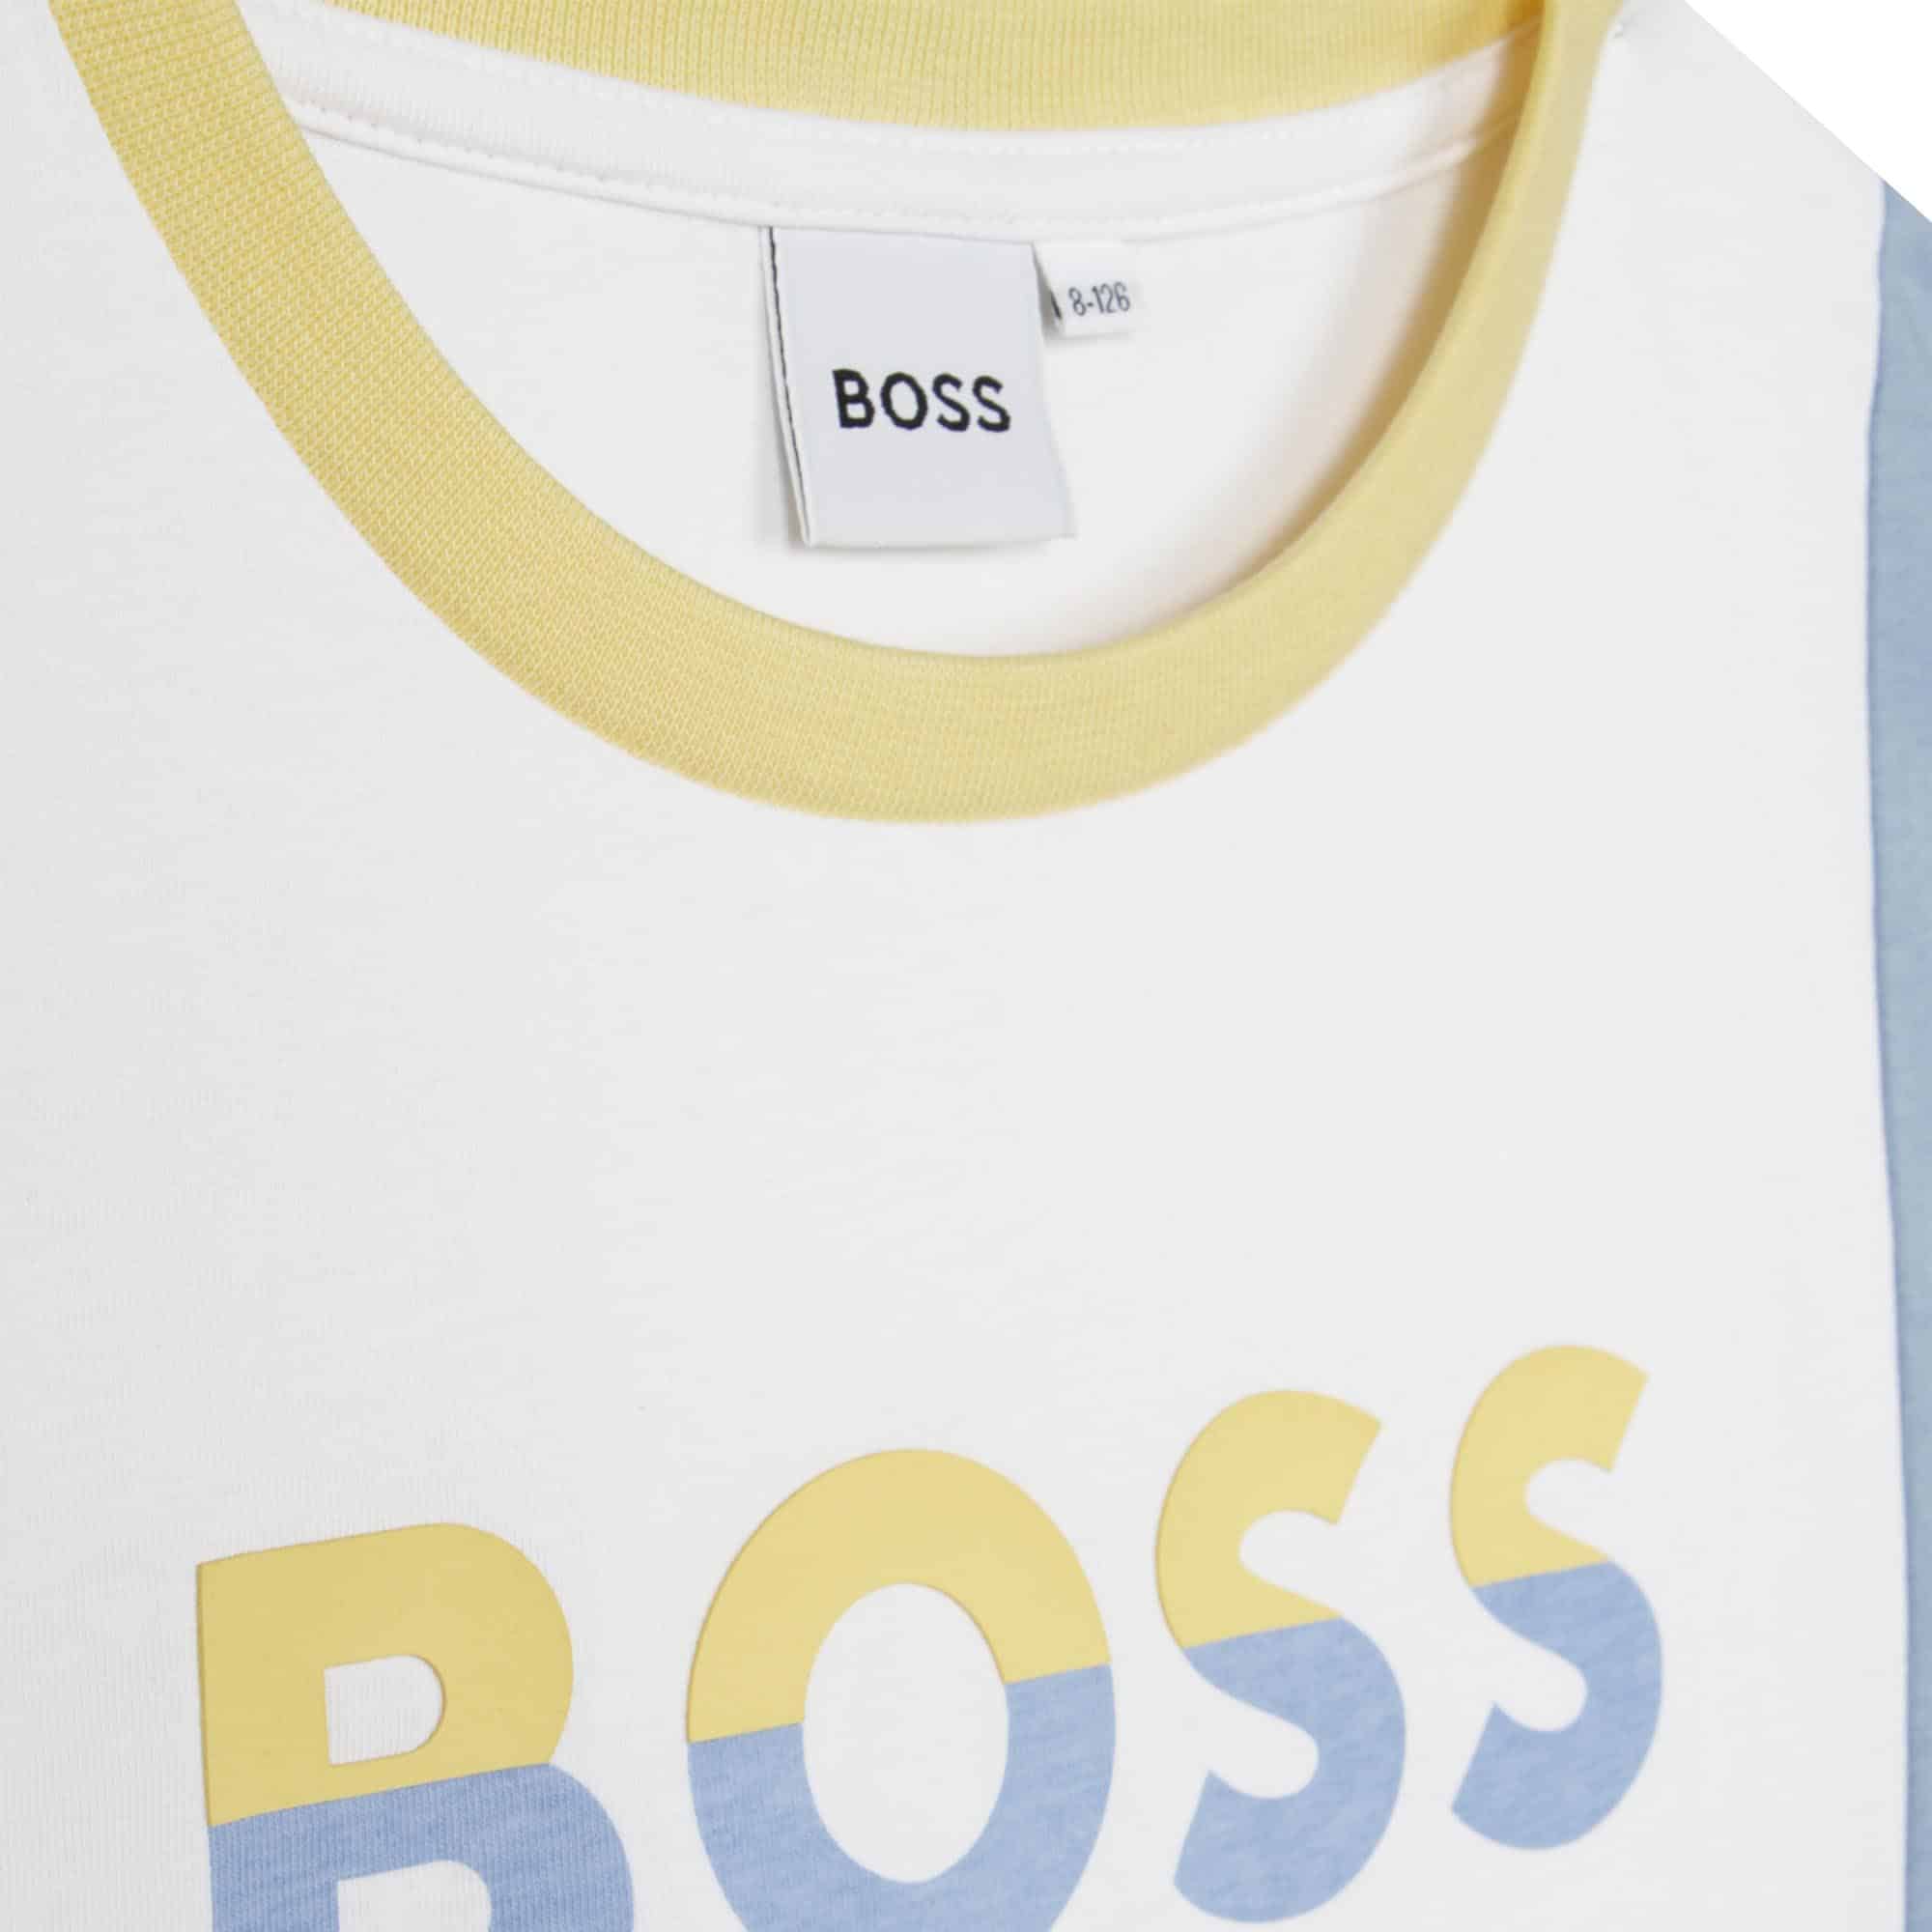 Boss boys tshirt in pale blue, lemon and black close up